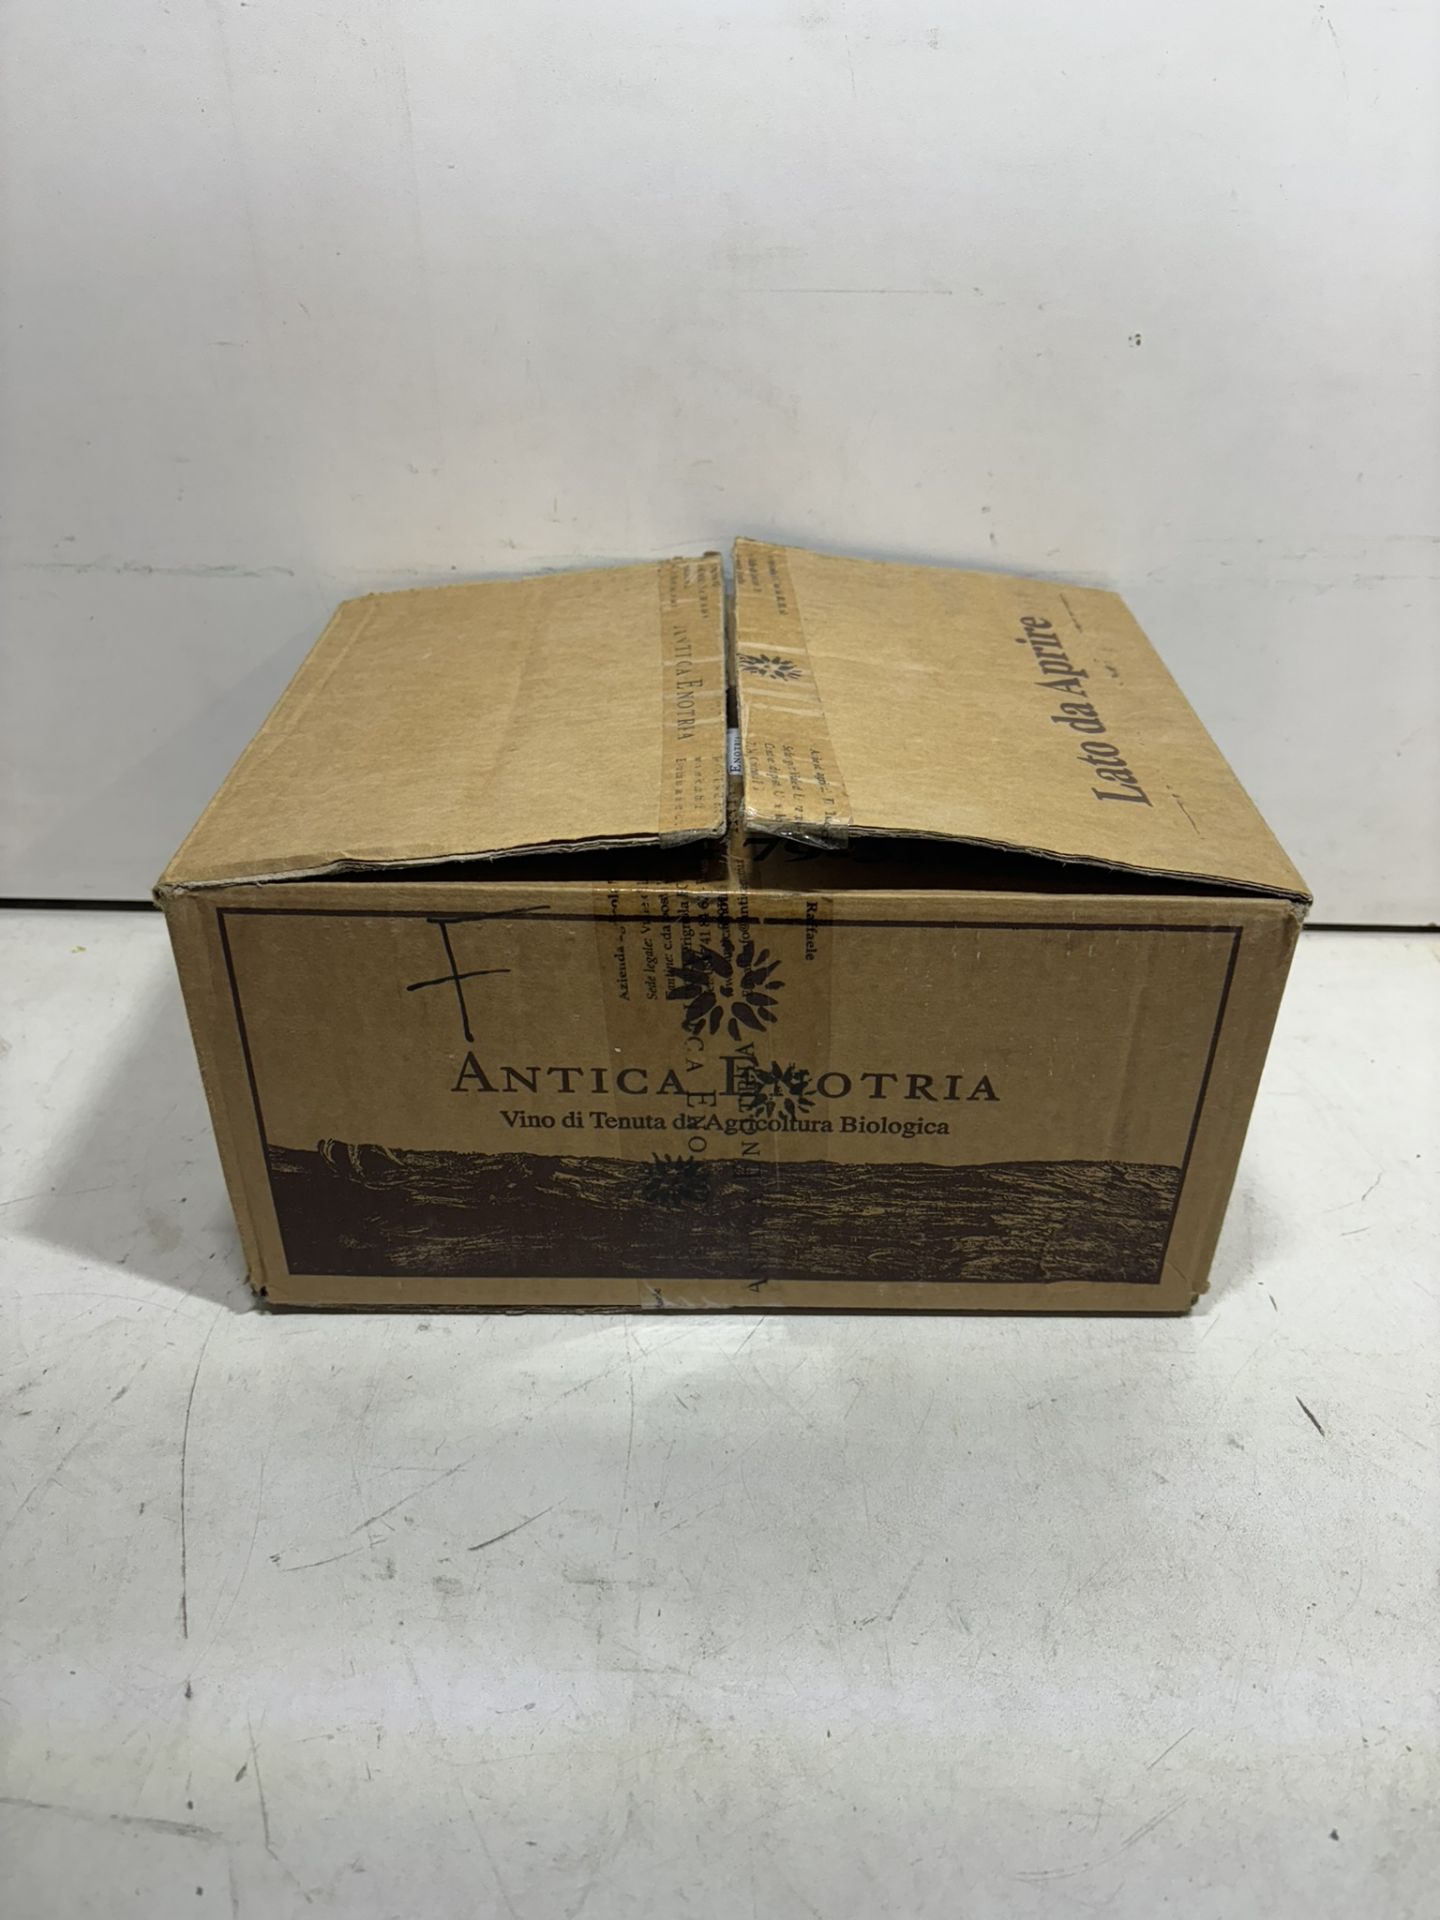 6 X Bottles Of Antica Enotria Puglia Rosso Italian Red Wine 75Cl - Image 3 of 4